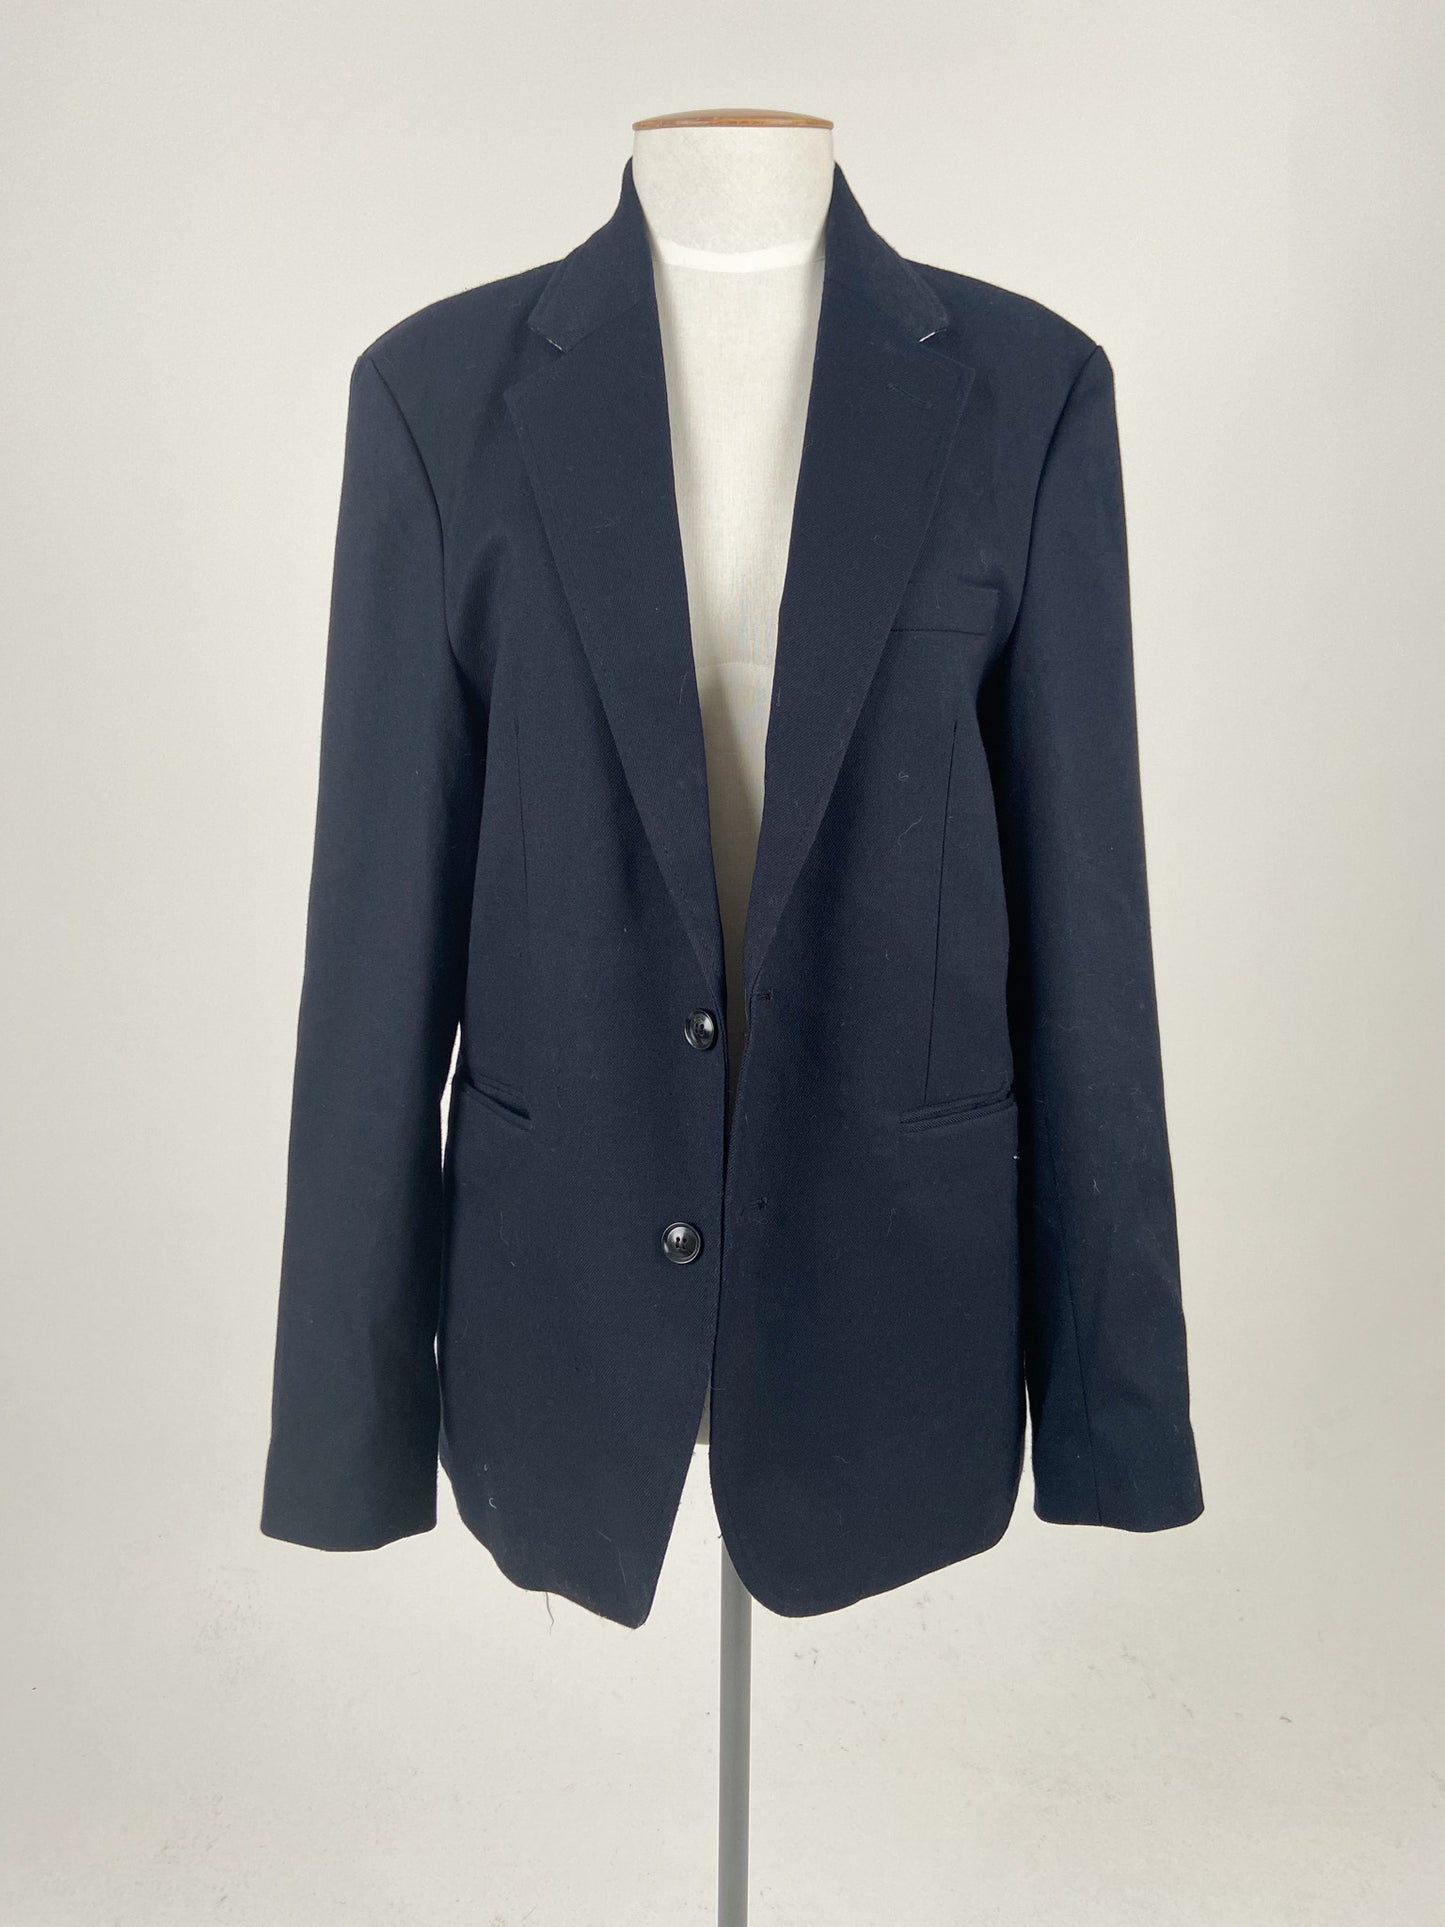 Unknown Brand | Navy Formal/Workwear Jacket | Size M